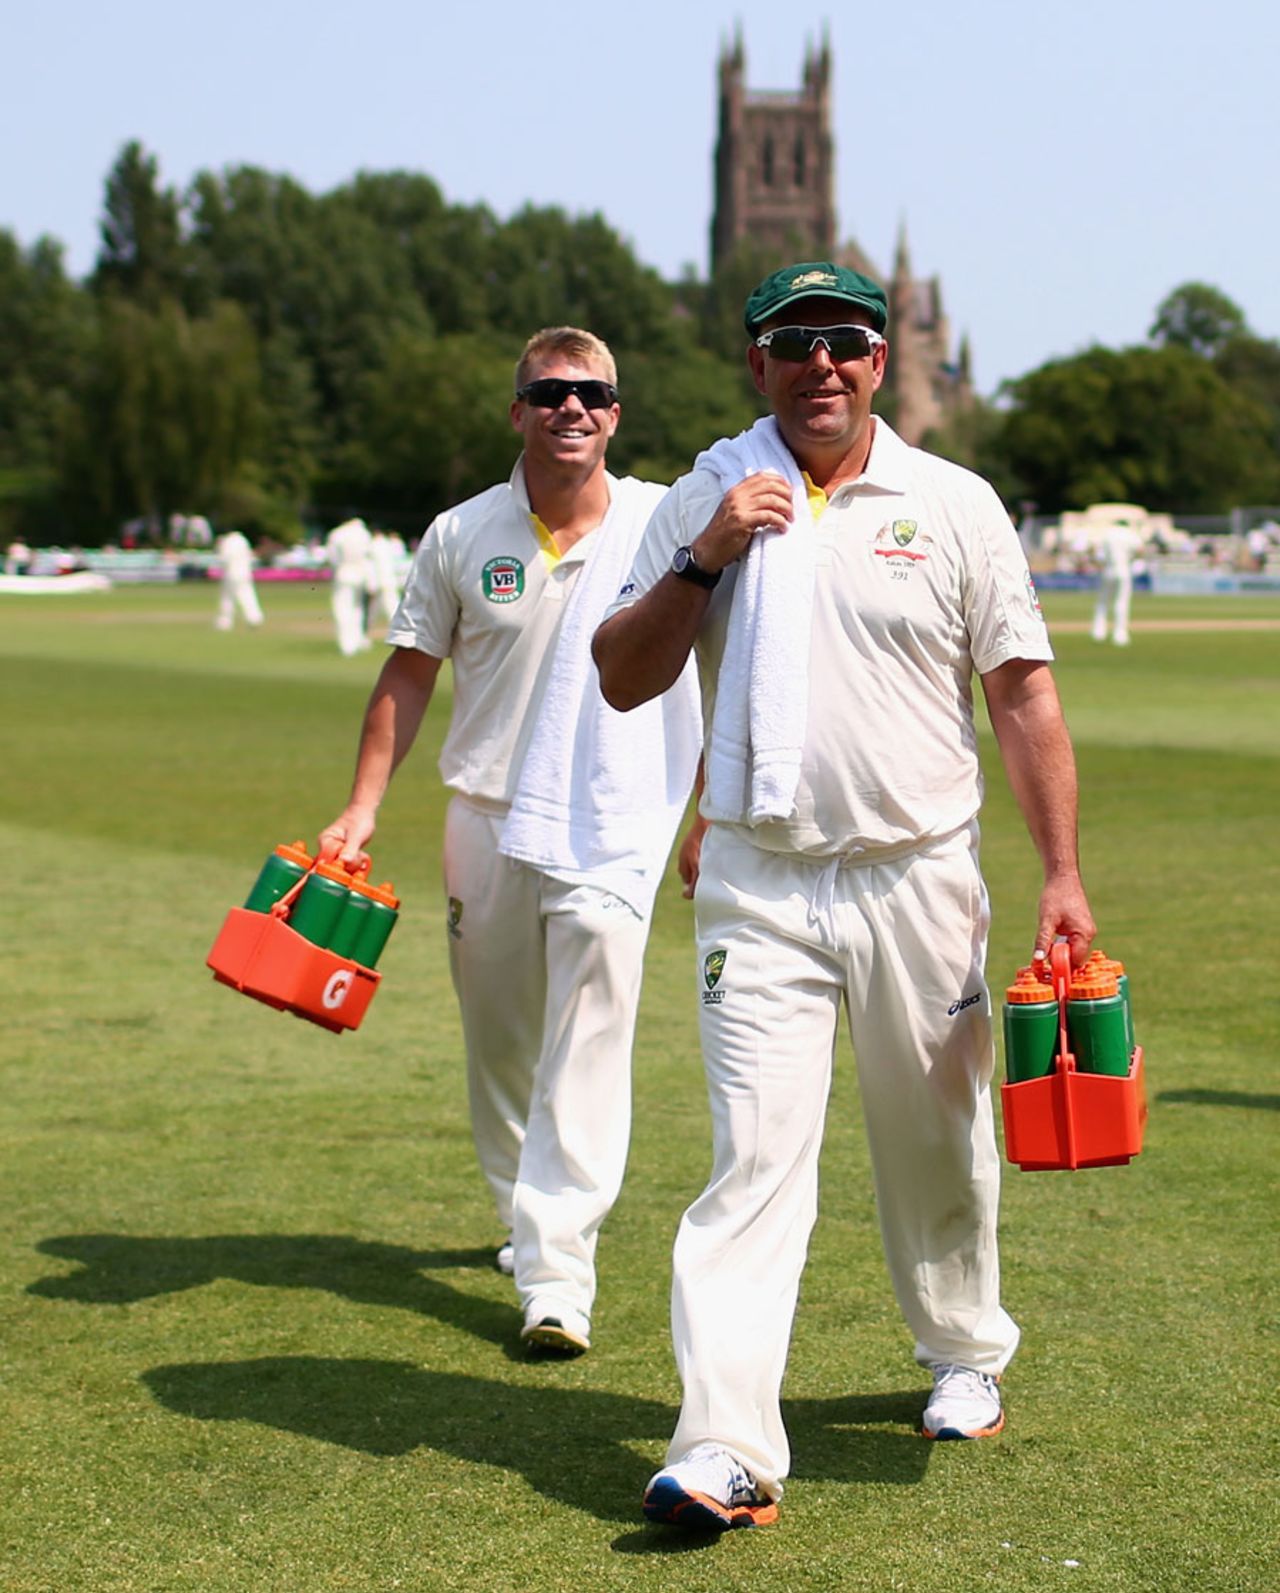 Darren Lehmann and David Warner walk off after carrying drinks, Worcestershire v Australians, 4th day, July 5, 2013